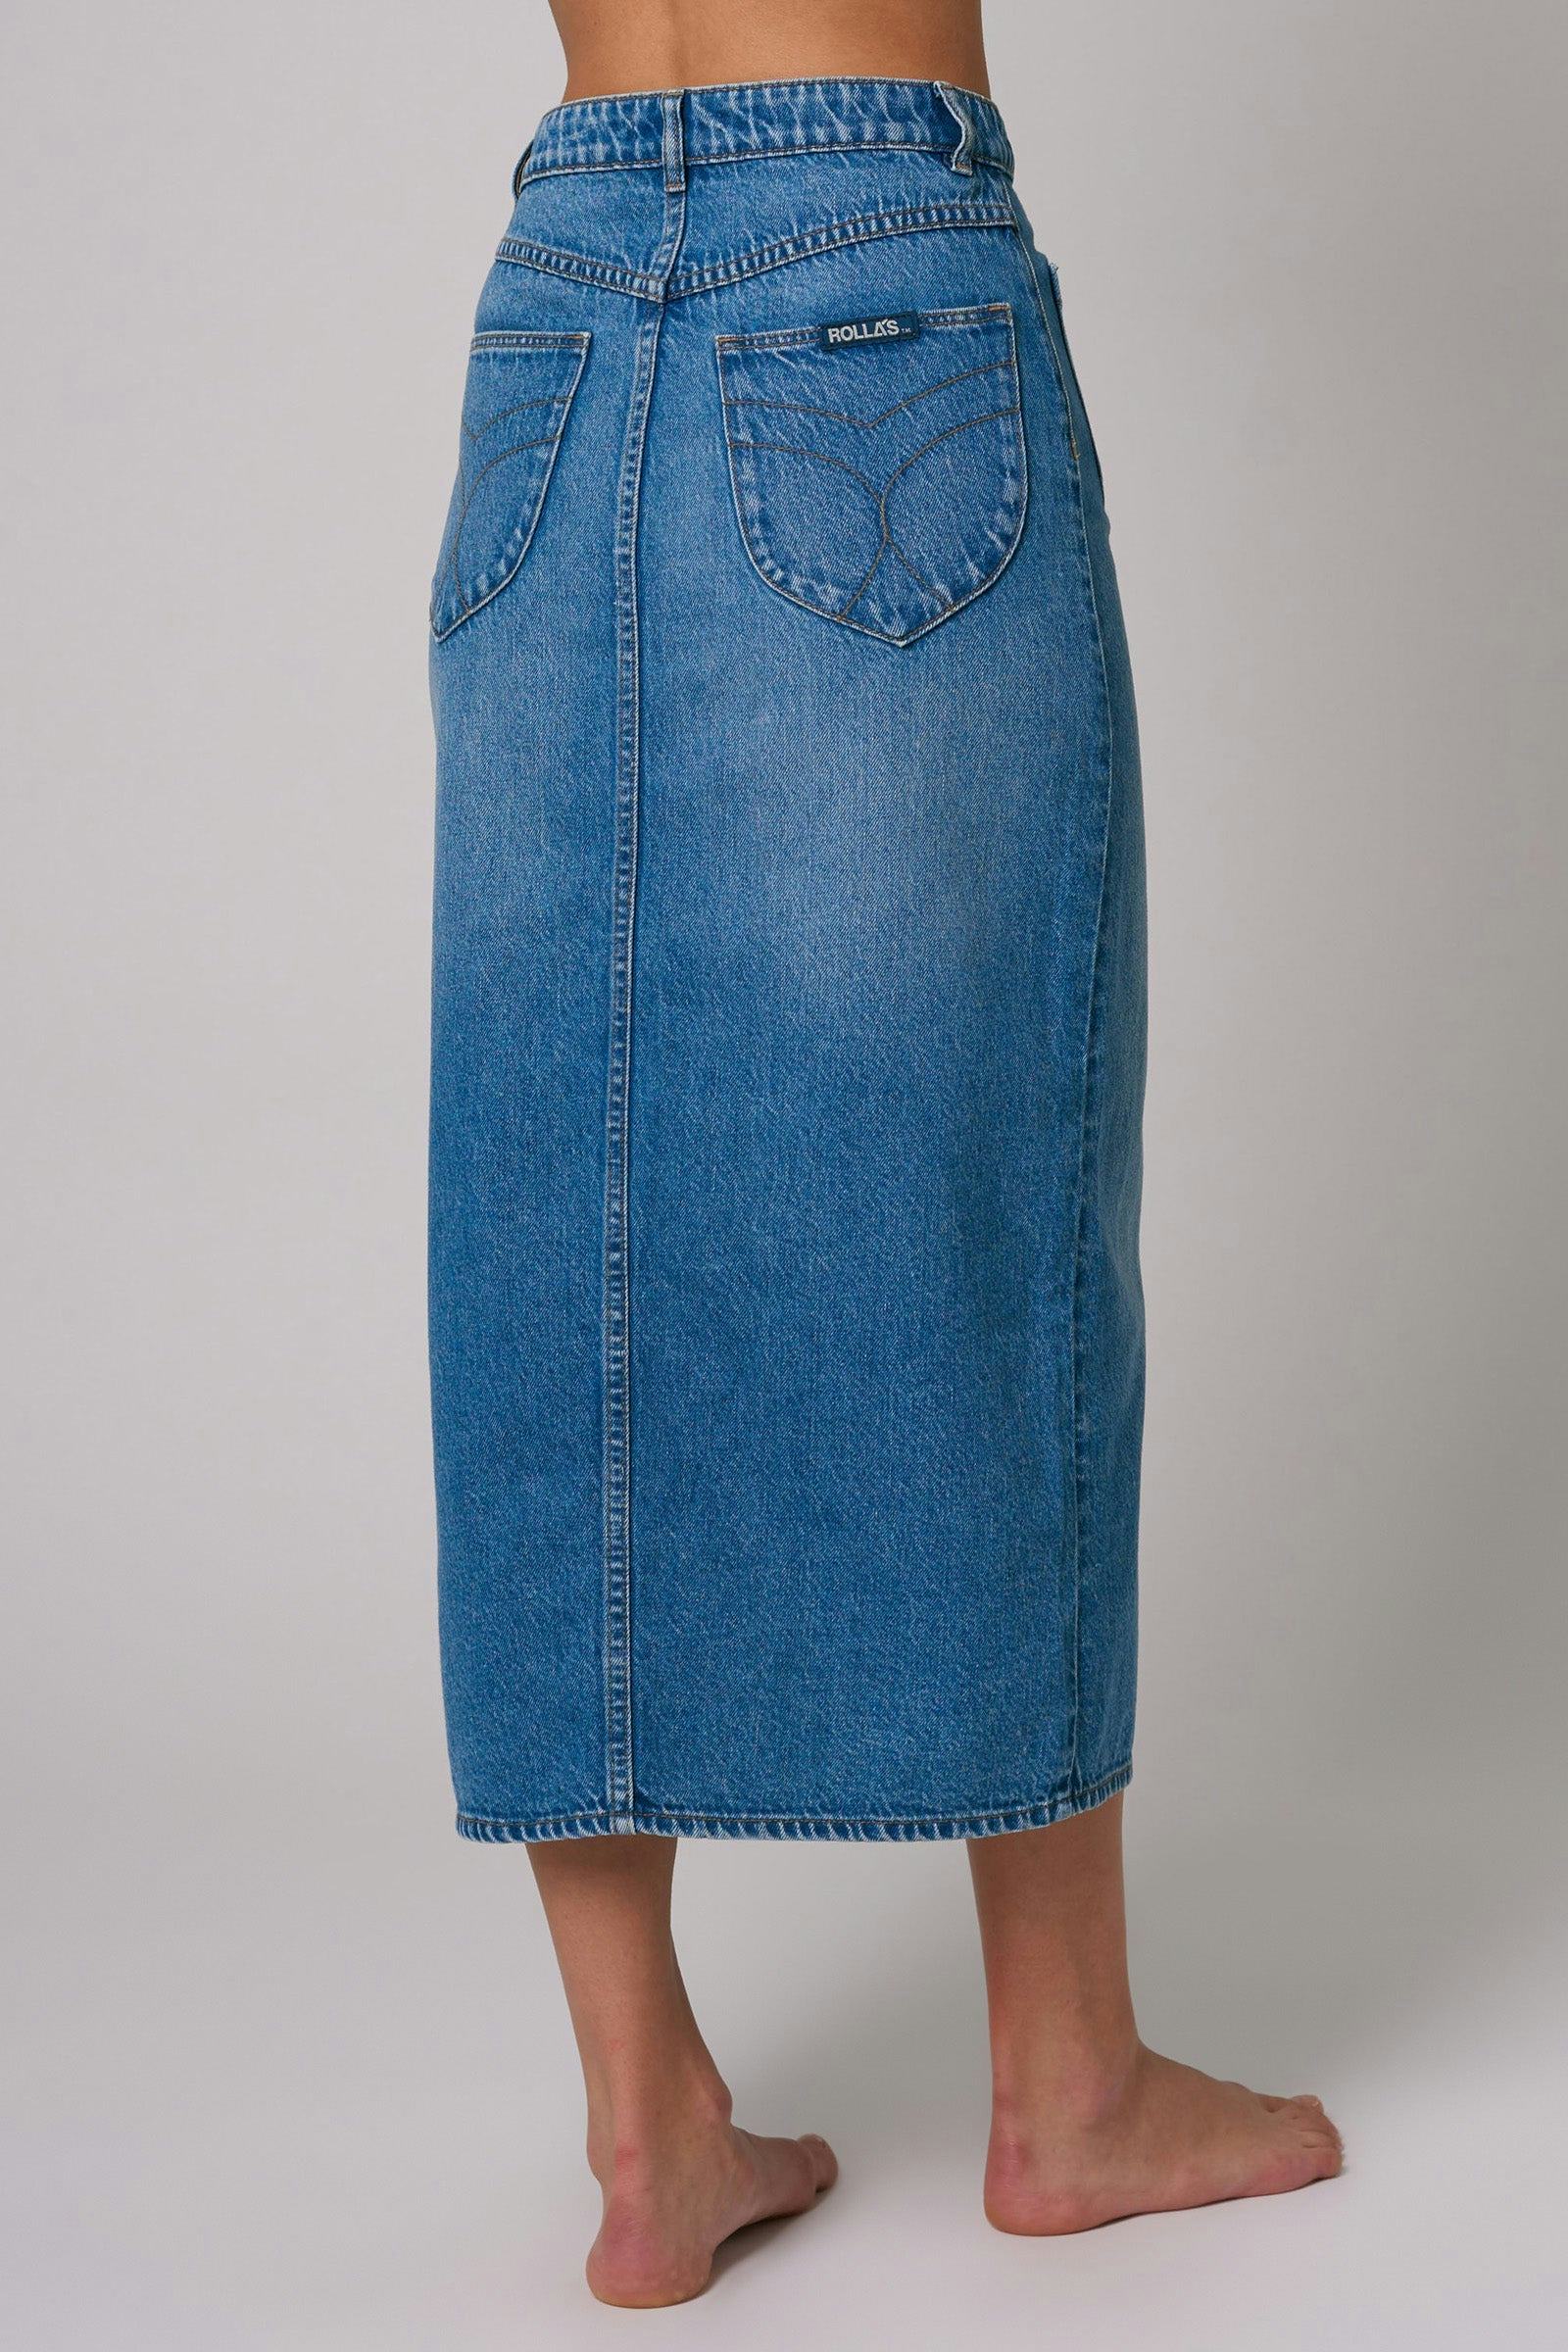 Buy Sailor Skirt - Azure Online | Rollas Jeans